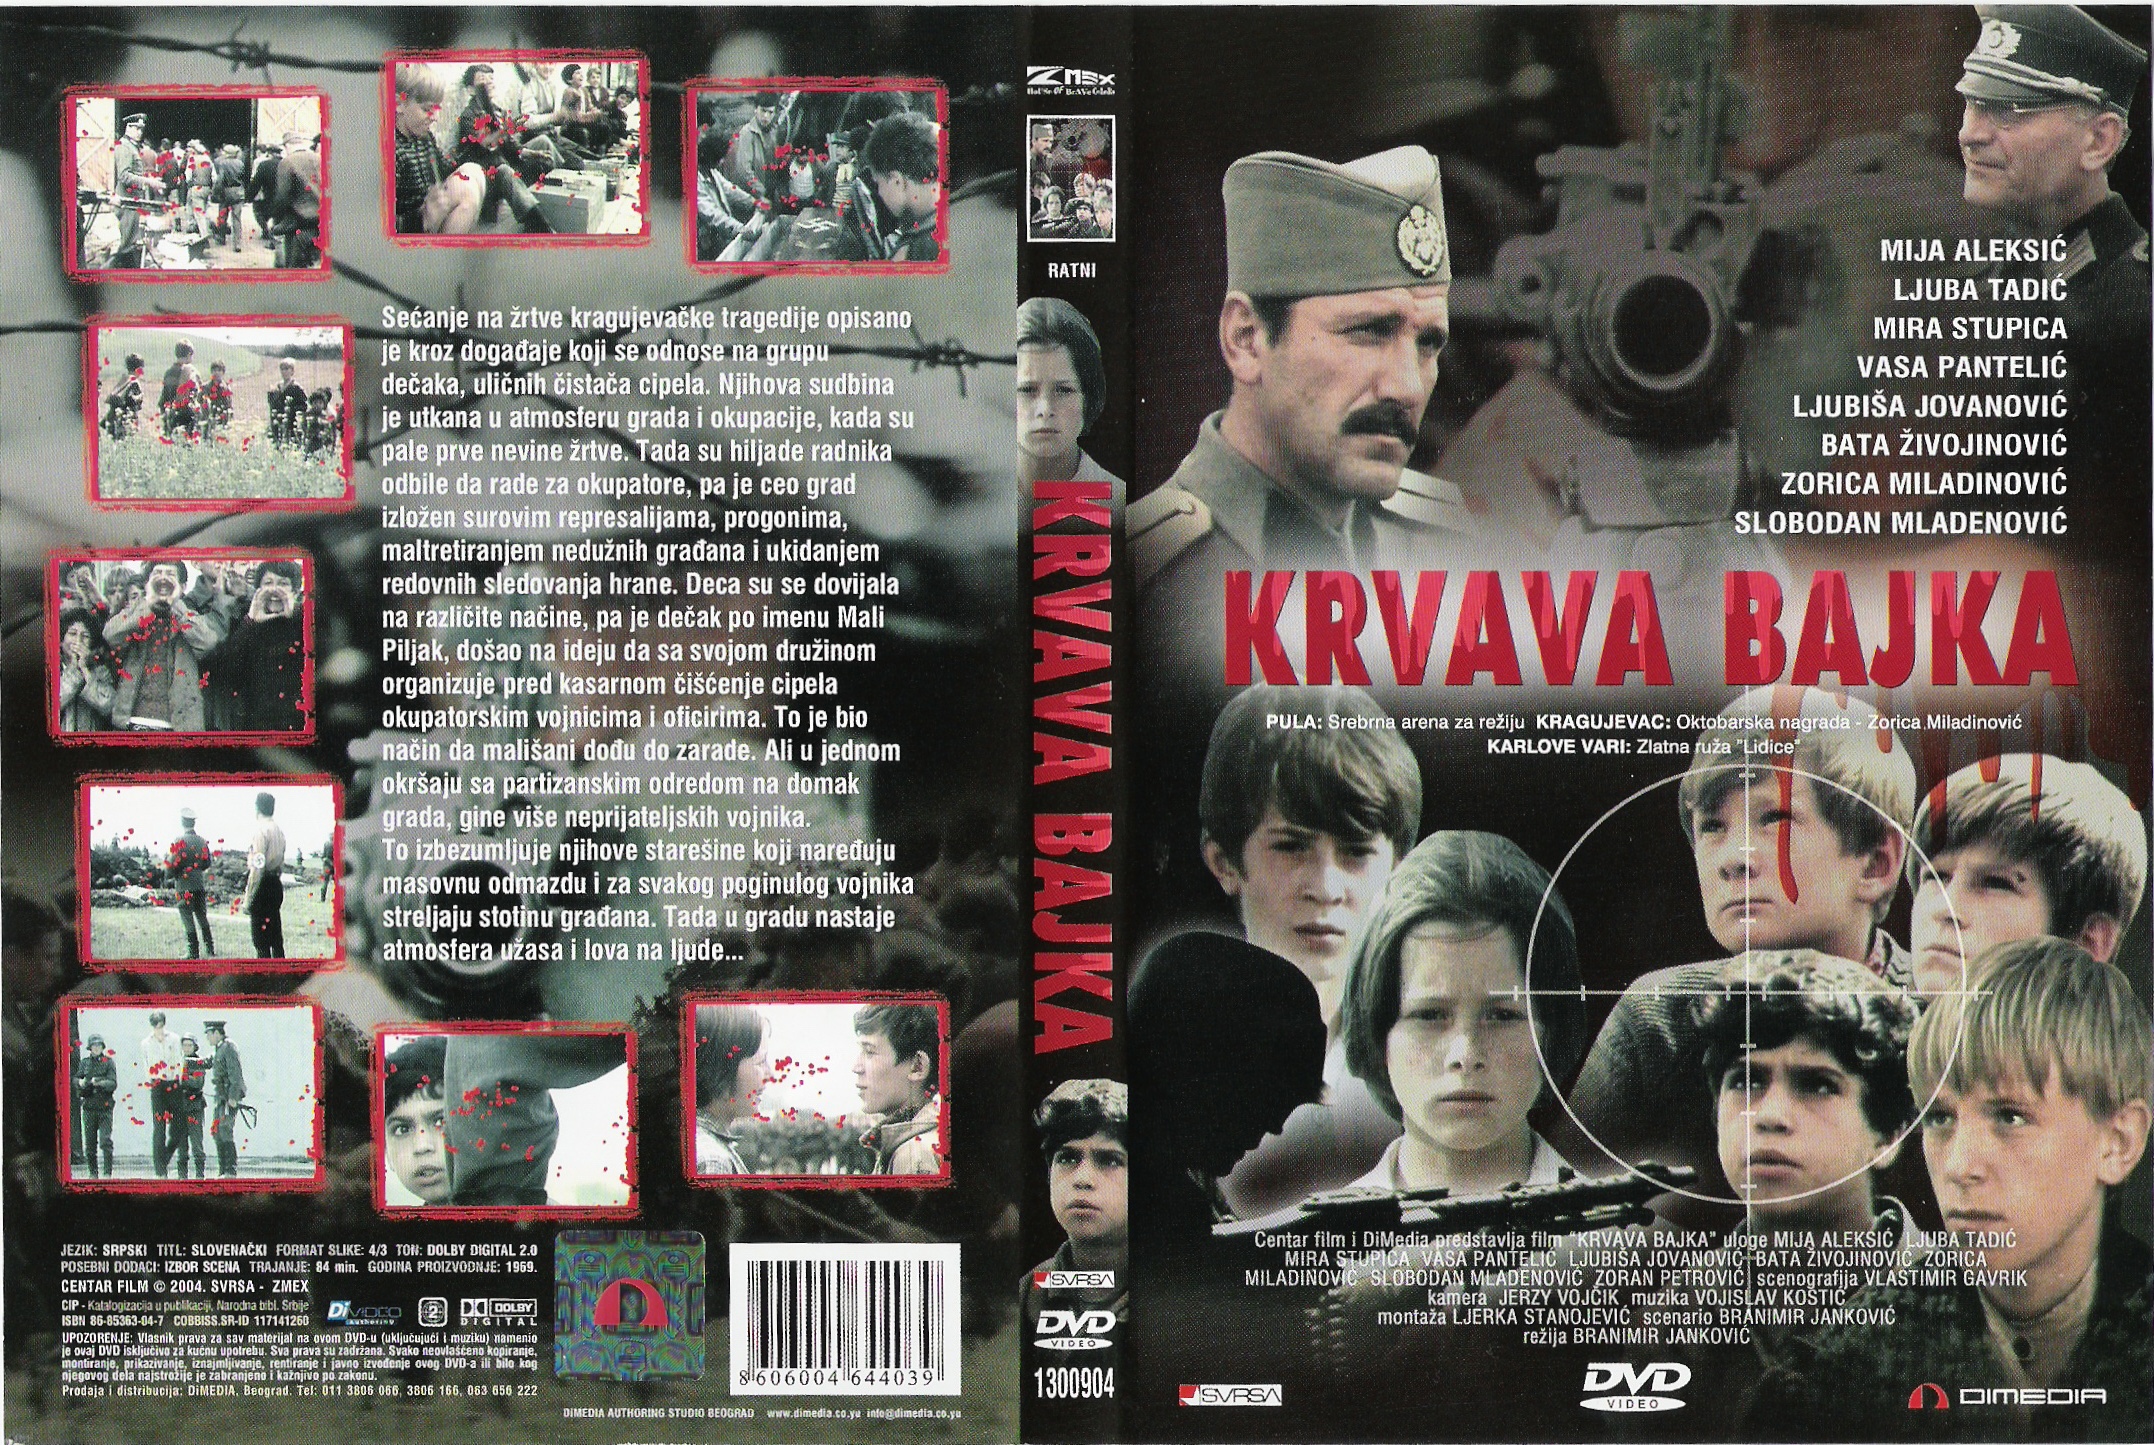 Click to view full size image -  DVD Cover - 0-9 - DVD - KRVAVA BAJKA - DVD - KRVAVA BAJKA.jpg